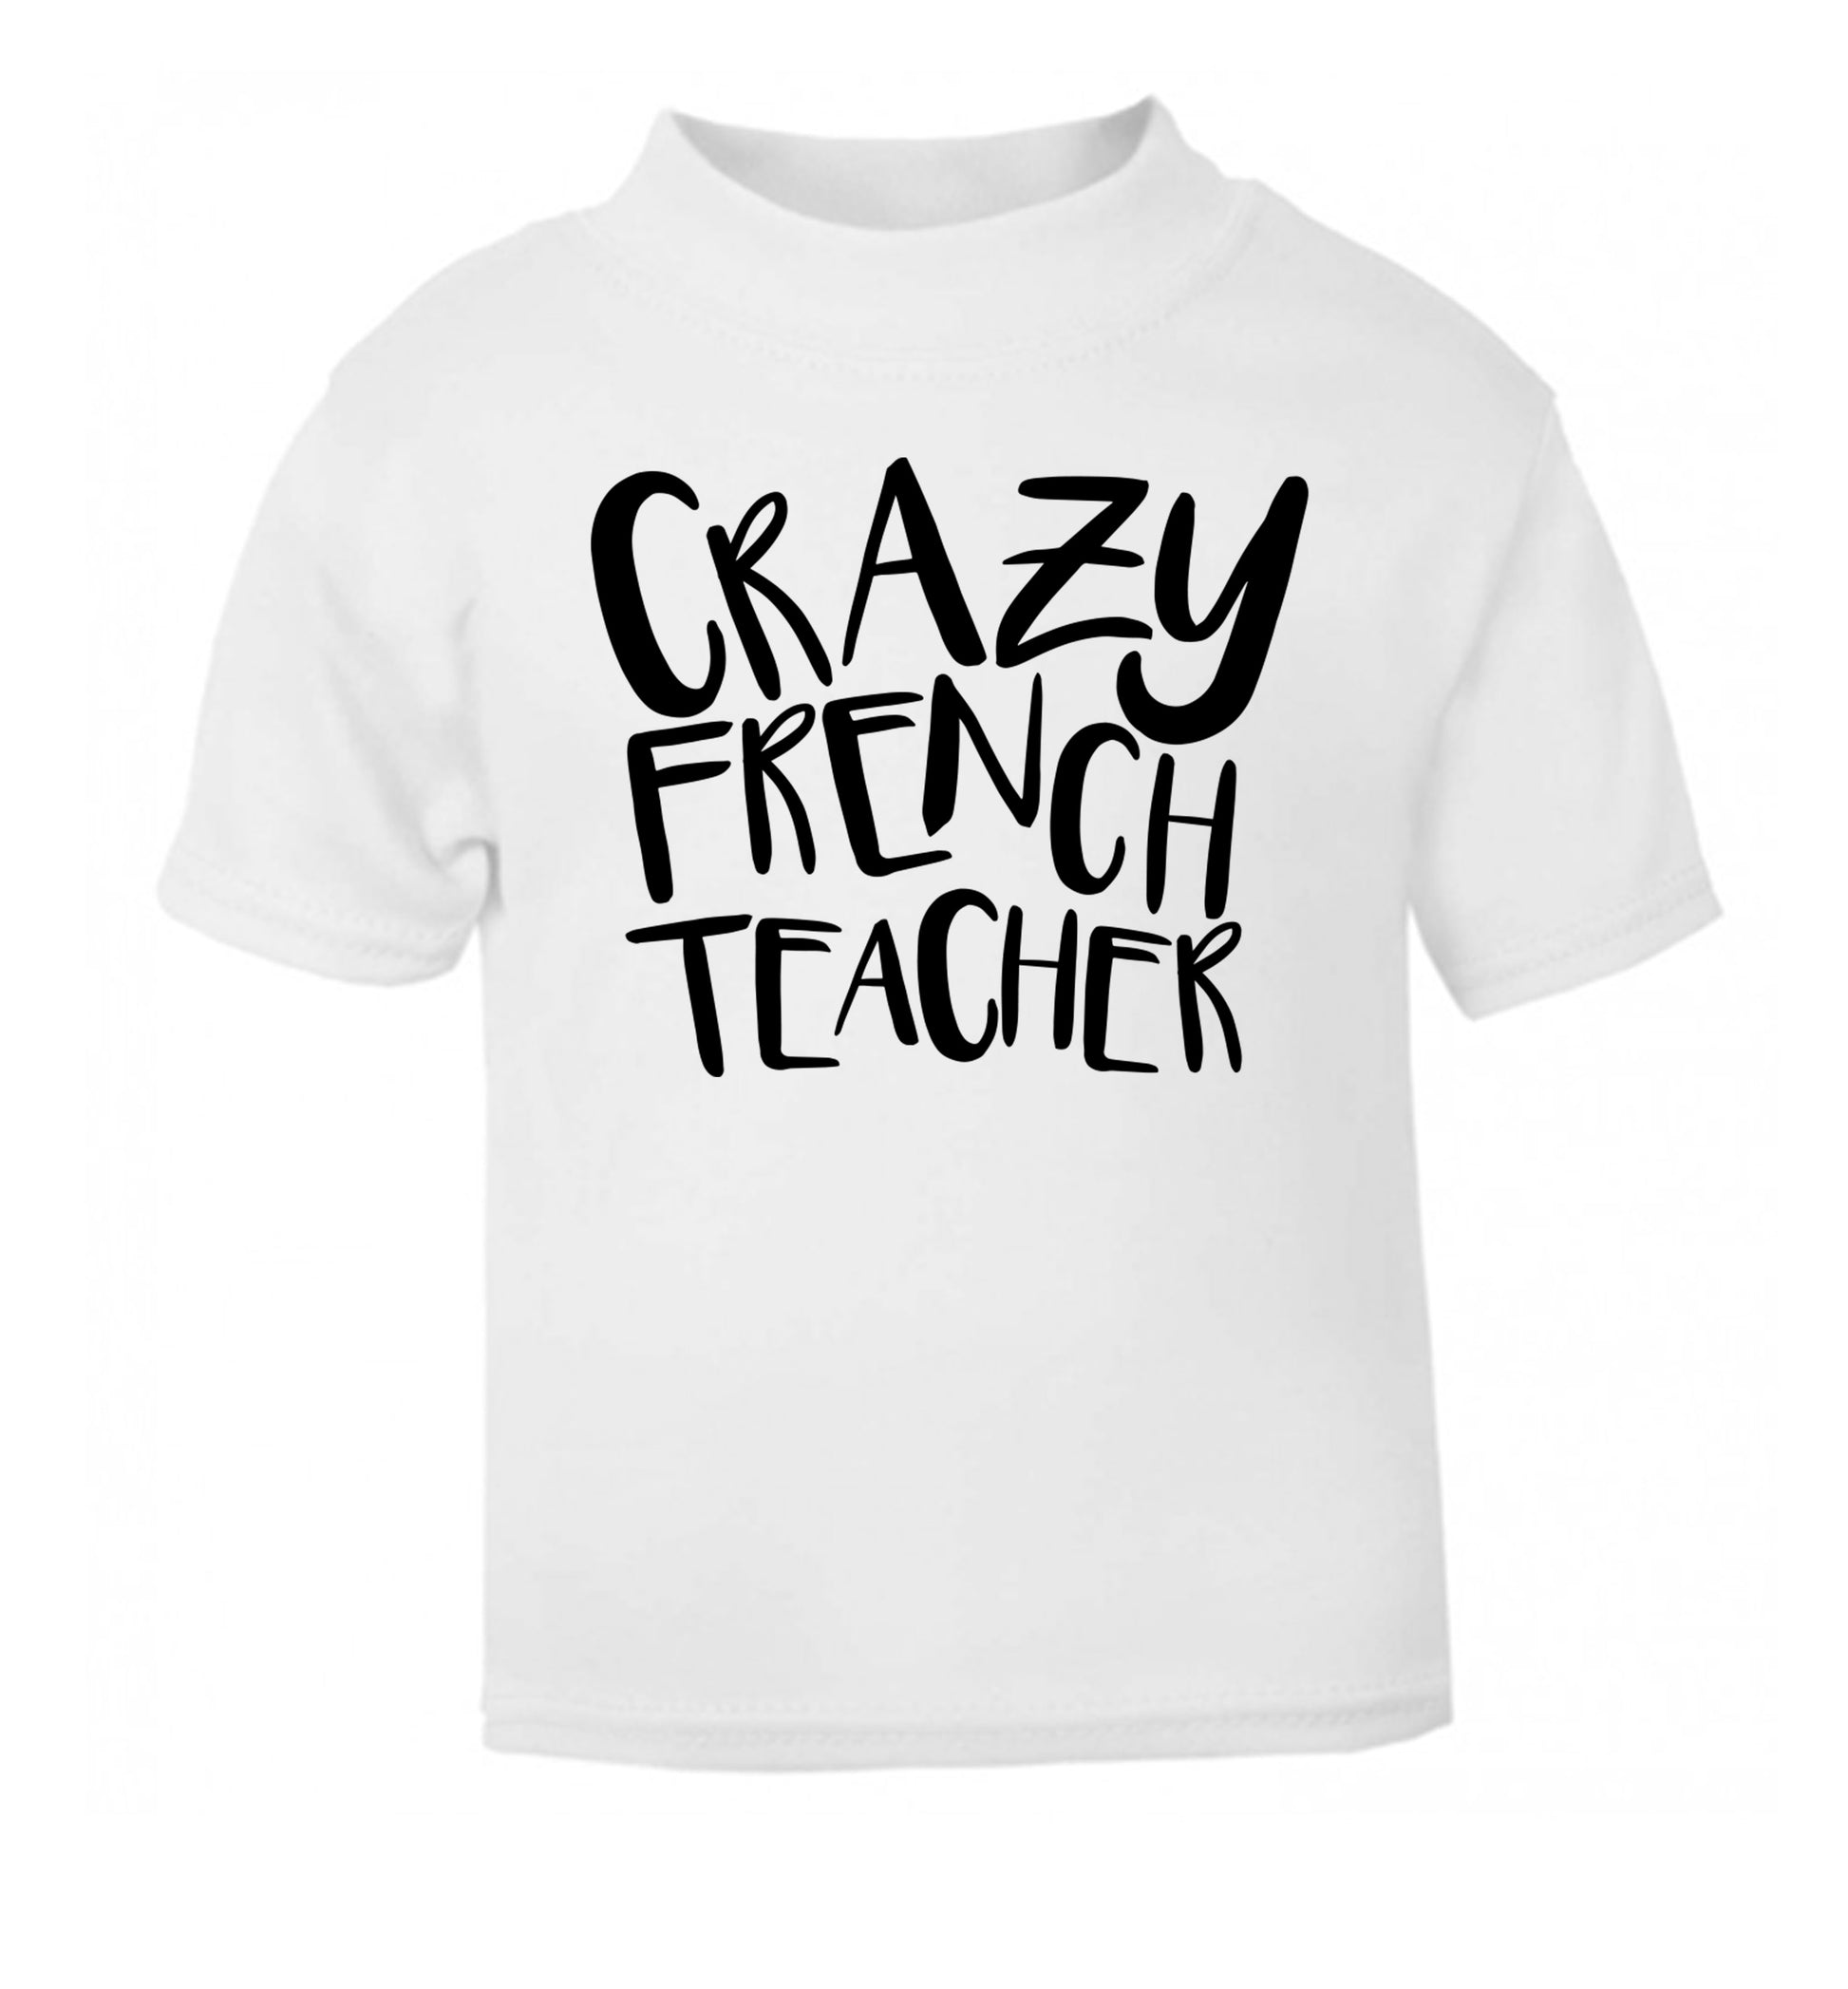 Crazy french teacher white Baby Toddler Tshirt 2 Years